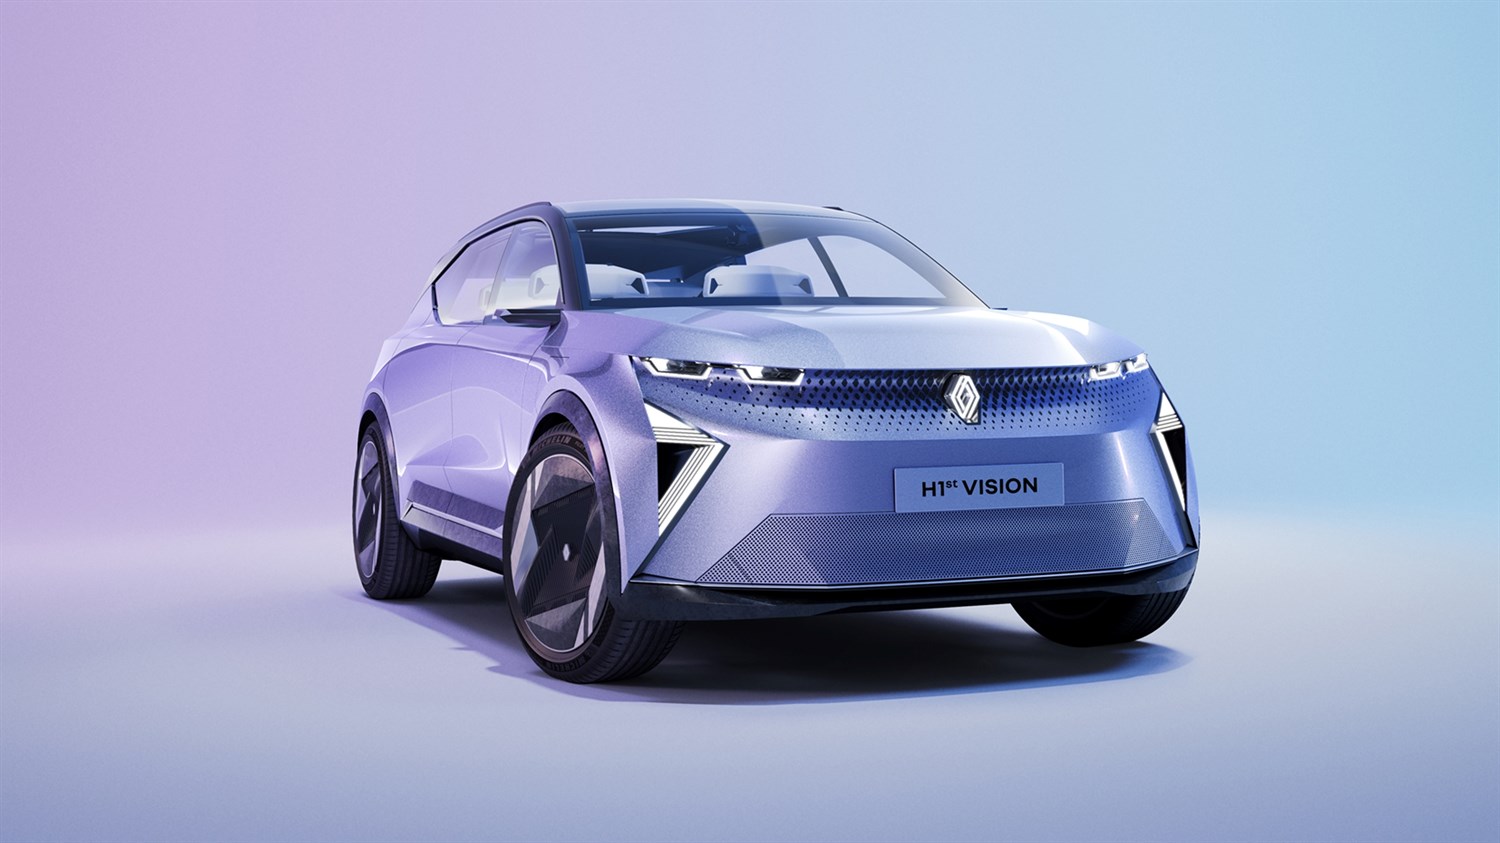 H1st vision - konceptno vozilo - Renault